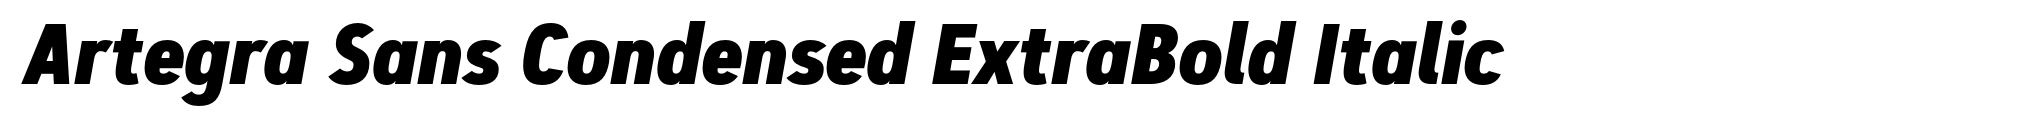 Artegra Sans Condensed ExtraBold Italic image